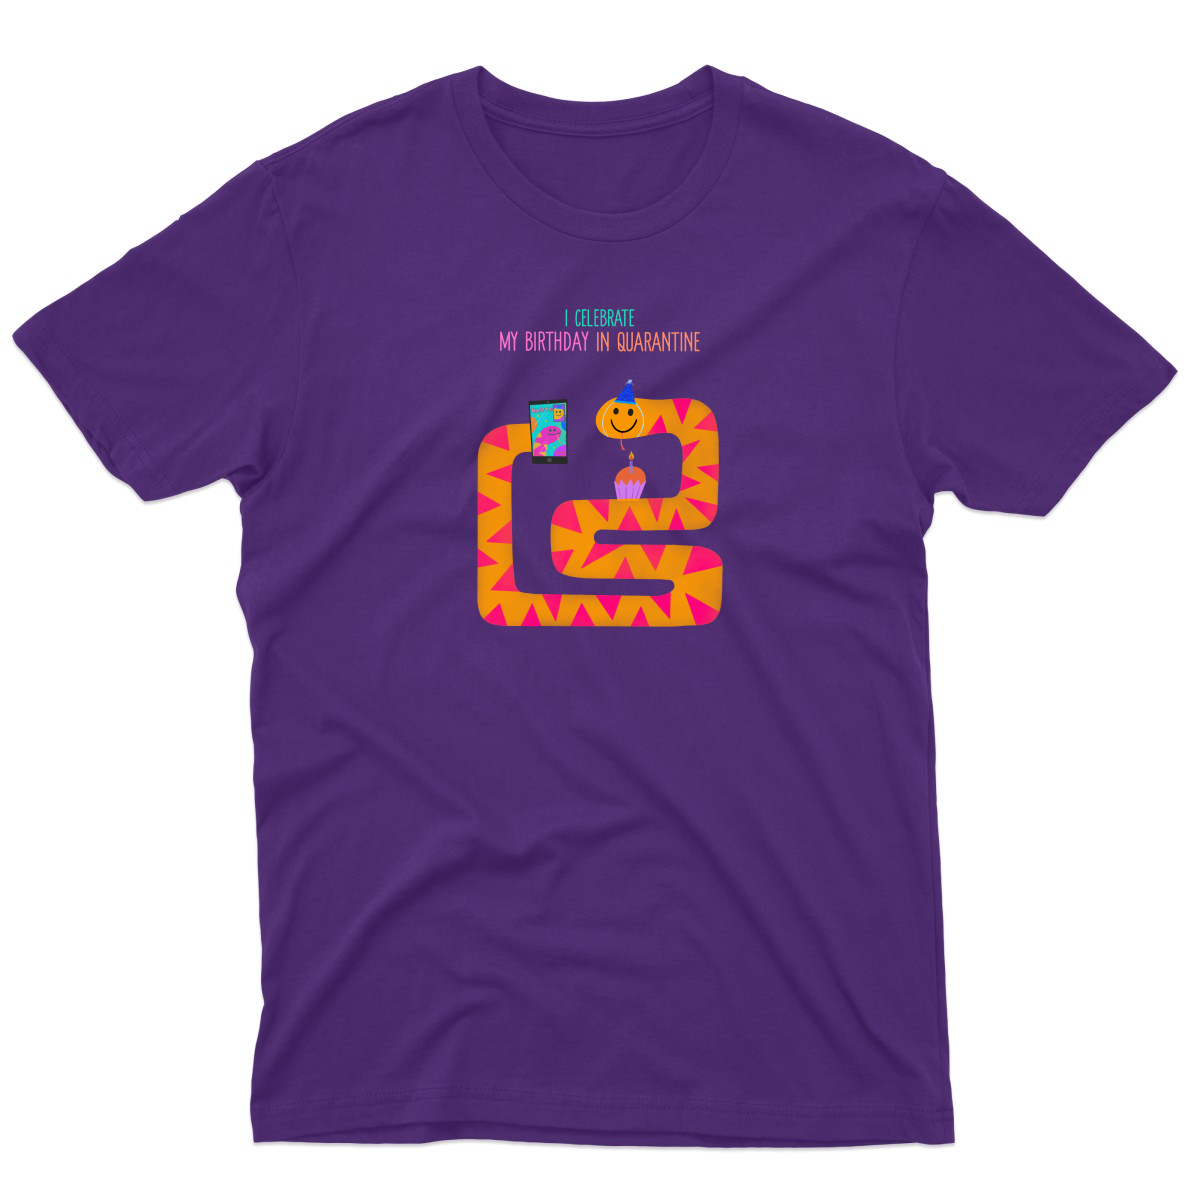 I celebrate my birthday in quarantine Men's T-shirt | Purple